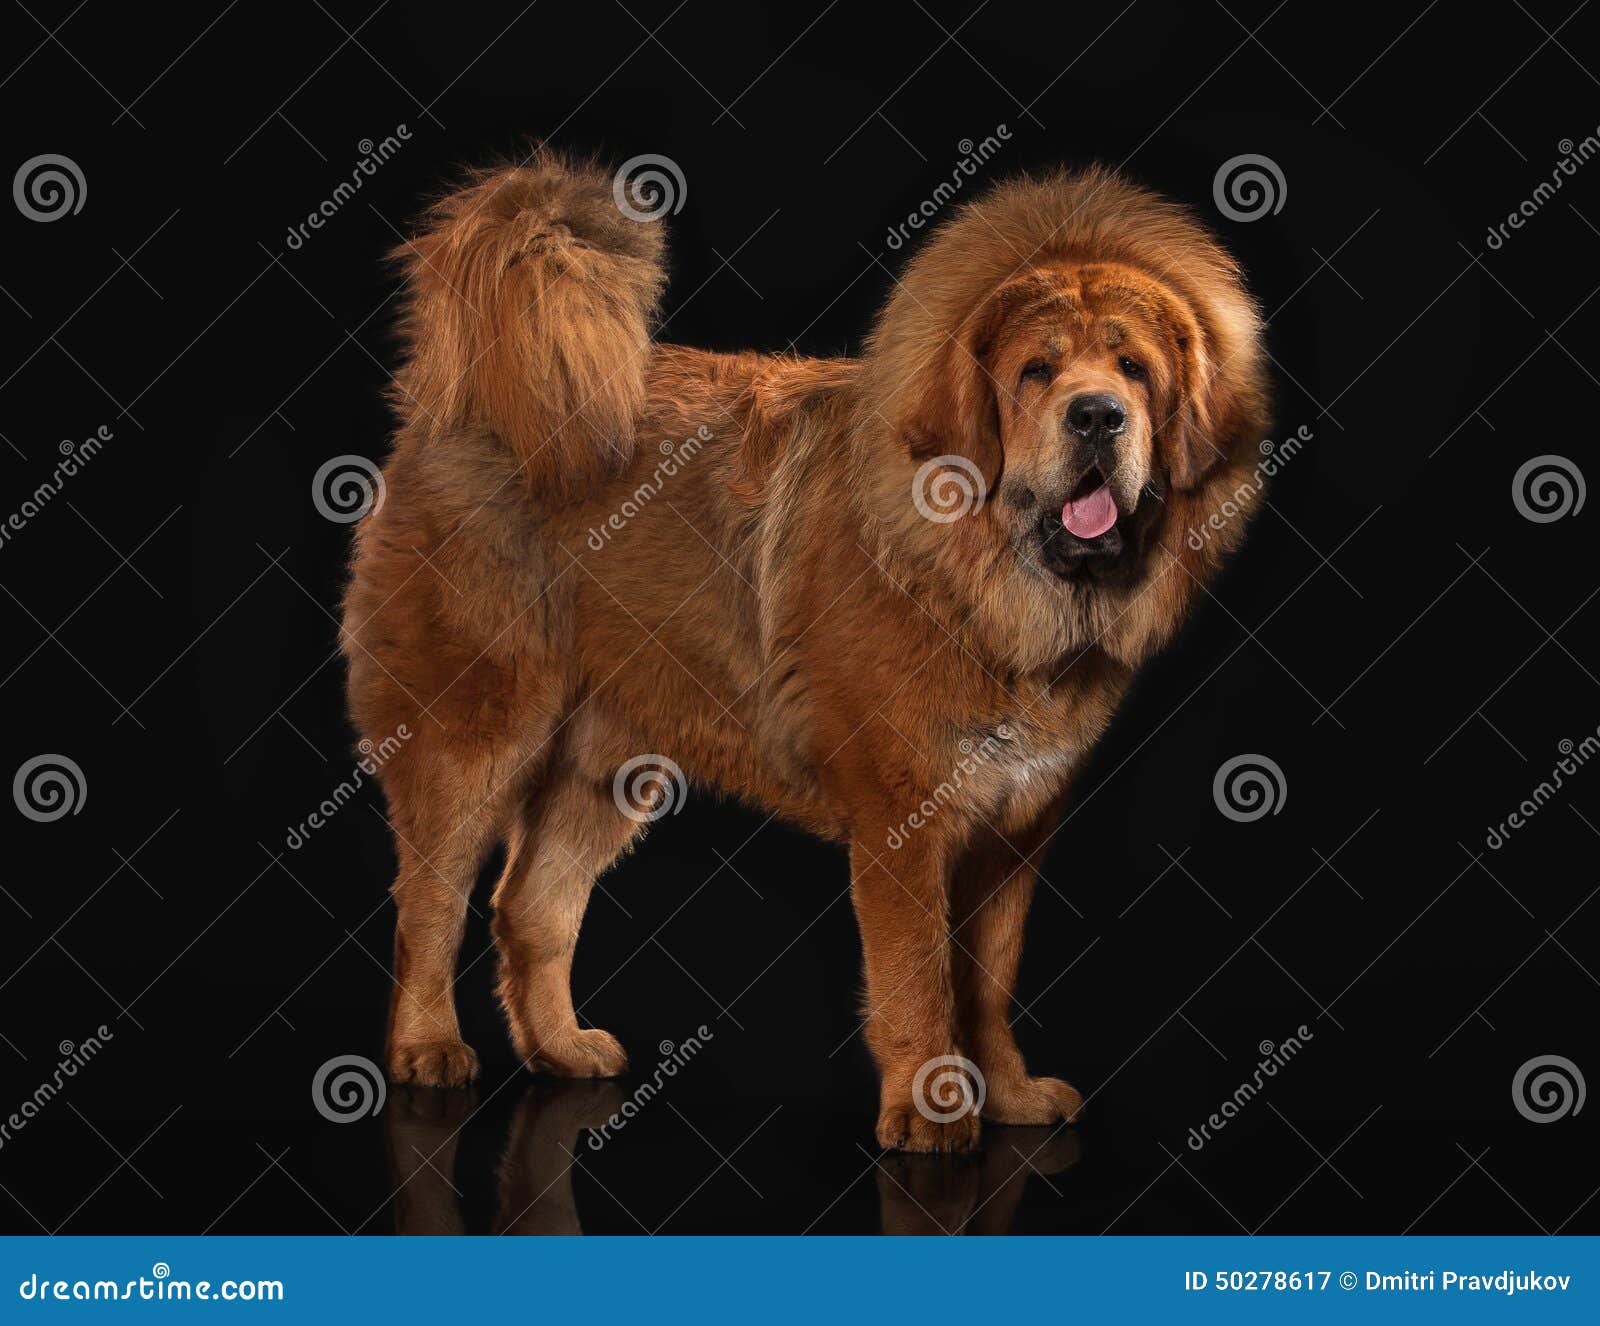 Details about   Simulation Tibetan Mastiff Black Dog Photography Animal Model Garden Decoration 